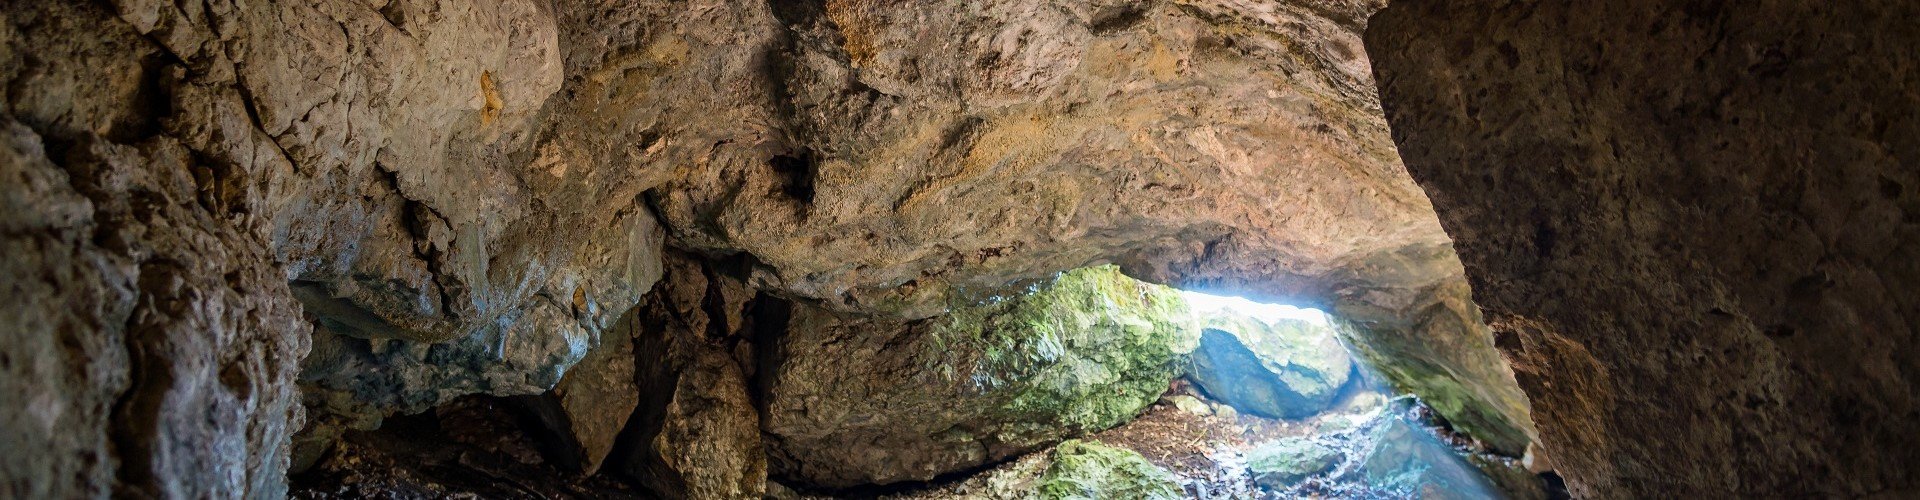 Ausflugsziel HöhlenErlebnisWelt Giengen-Hürben